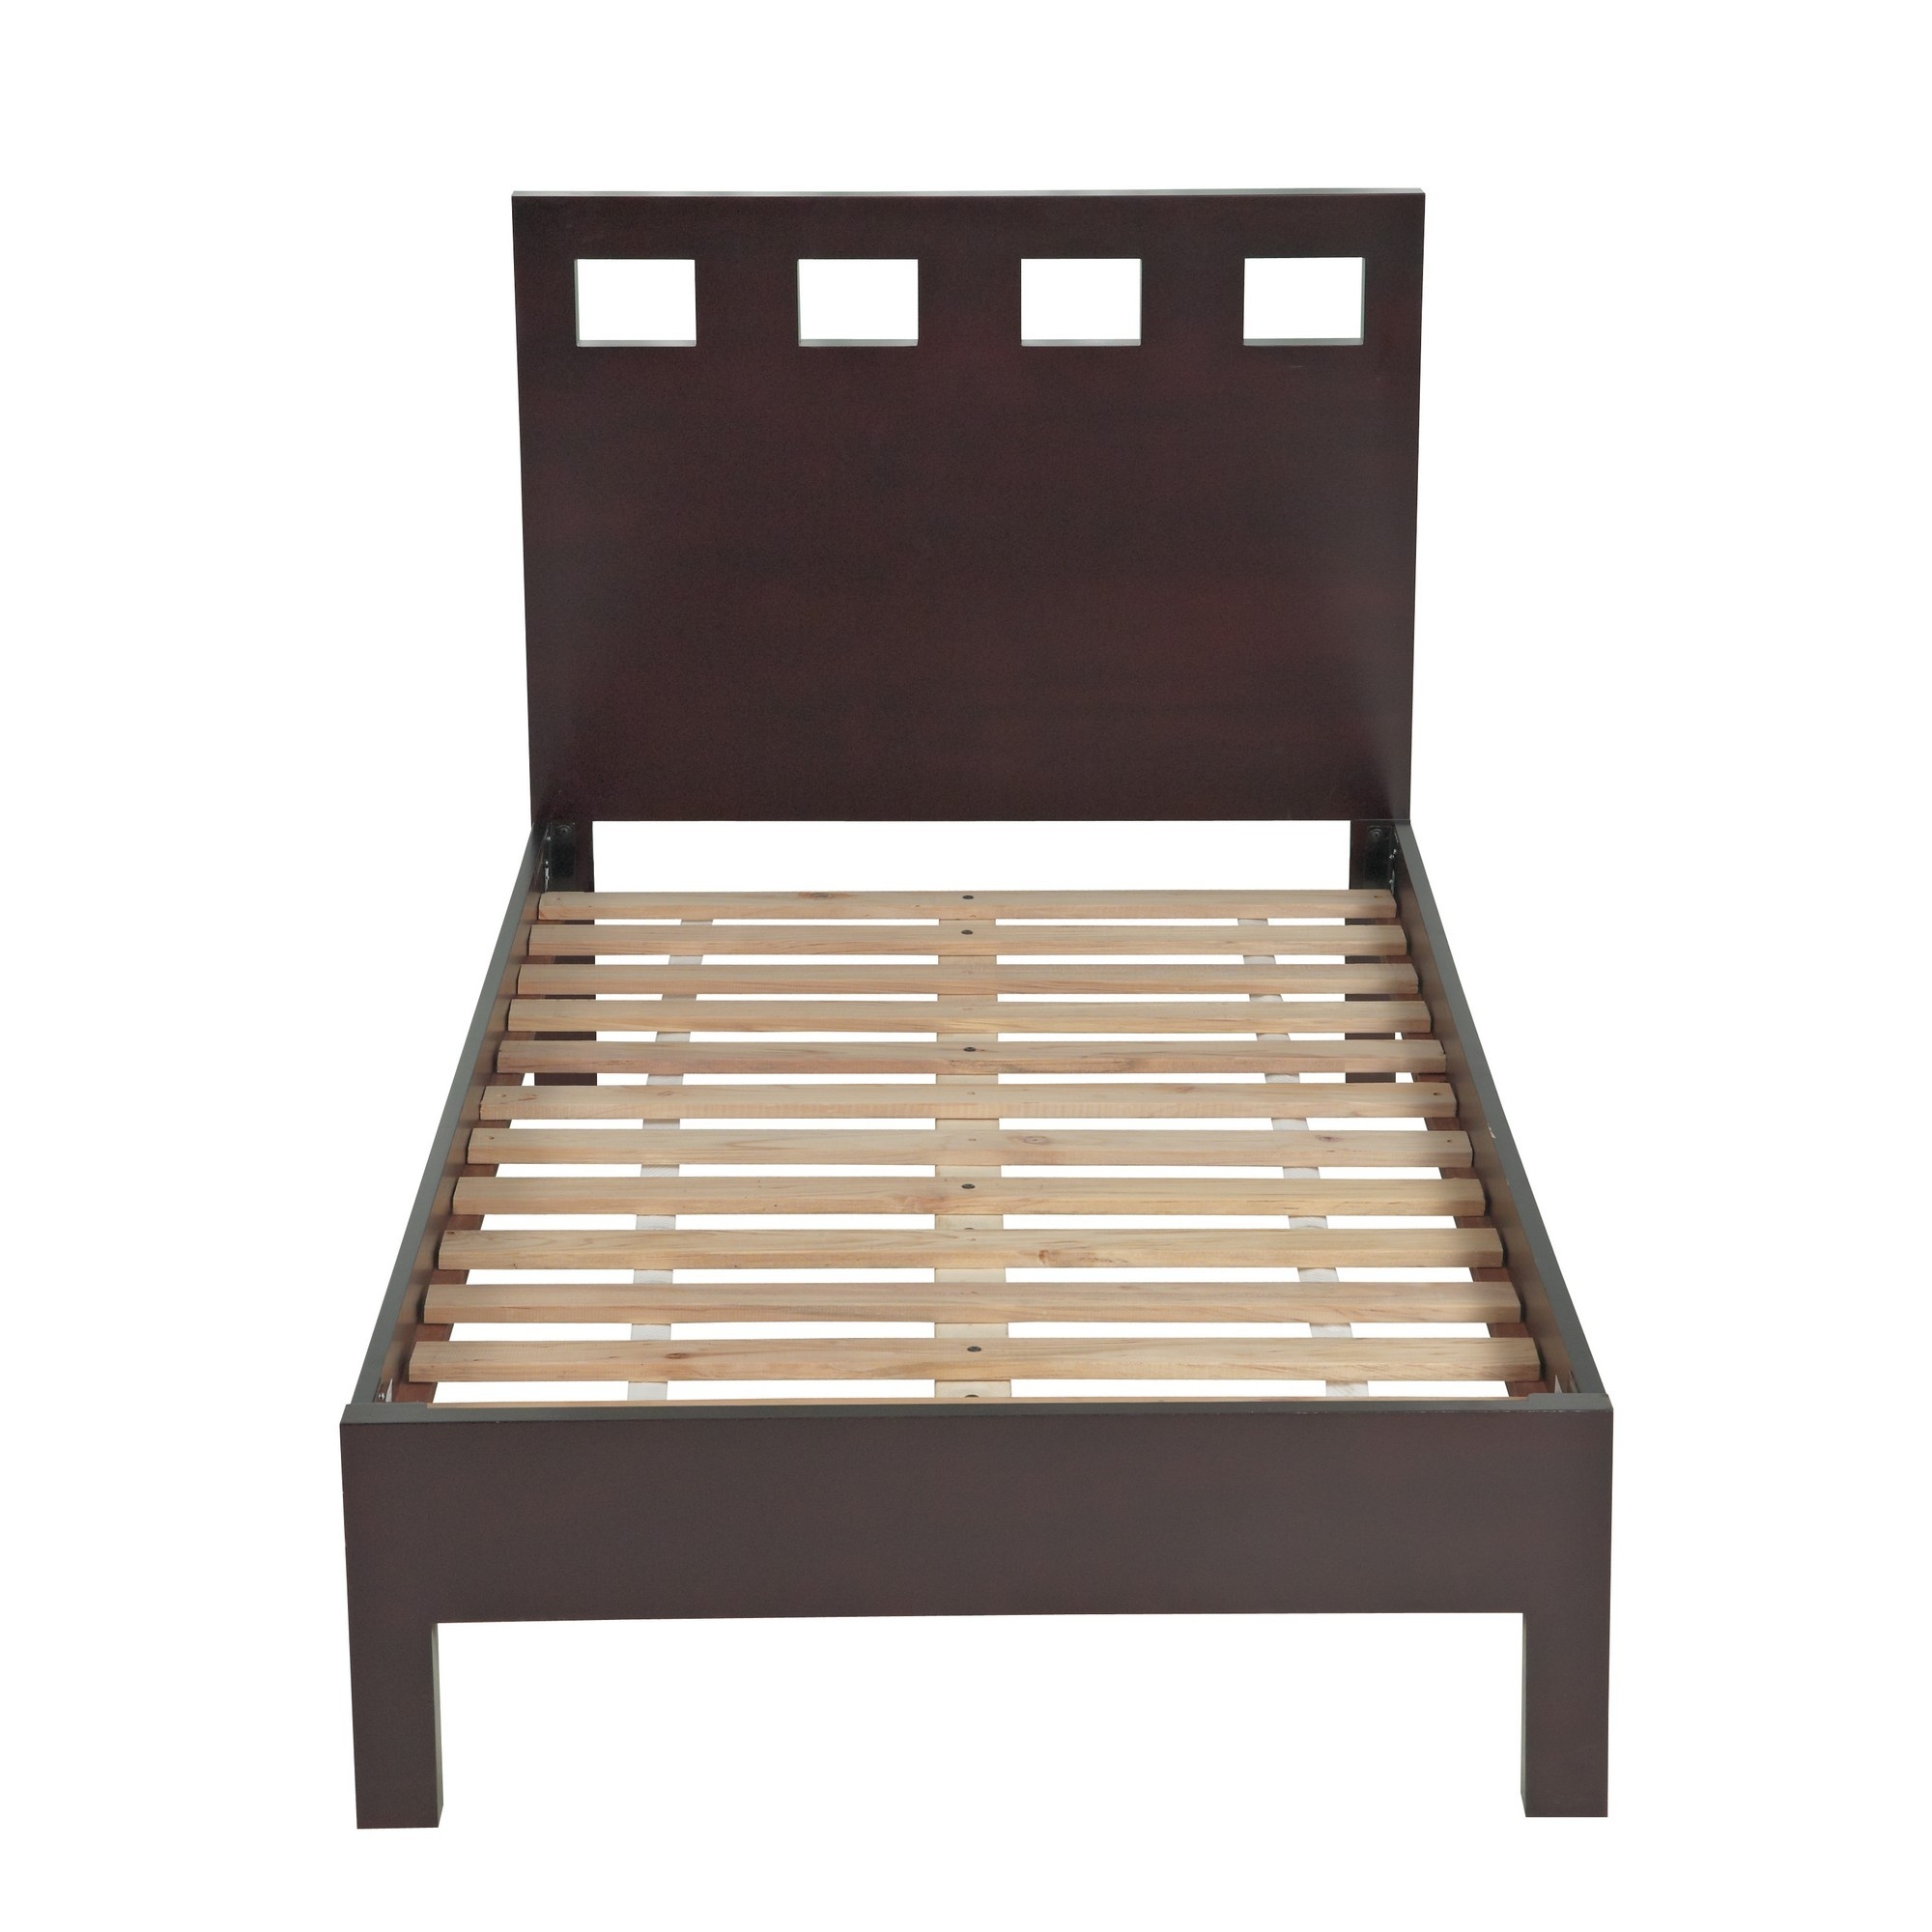 Yee Twin Size Platform Bed, Cut Out Panel Headboard, Espresso Brown Wood- Saltoro Sherpi